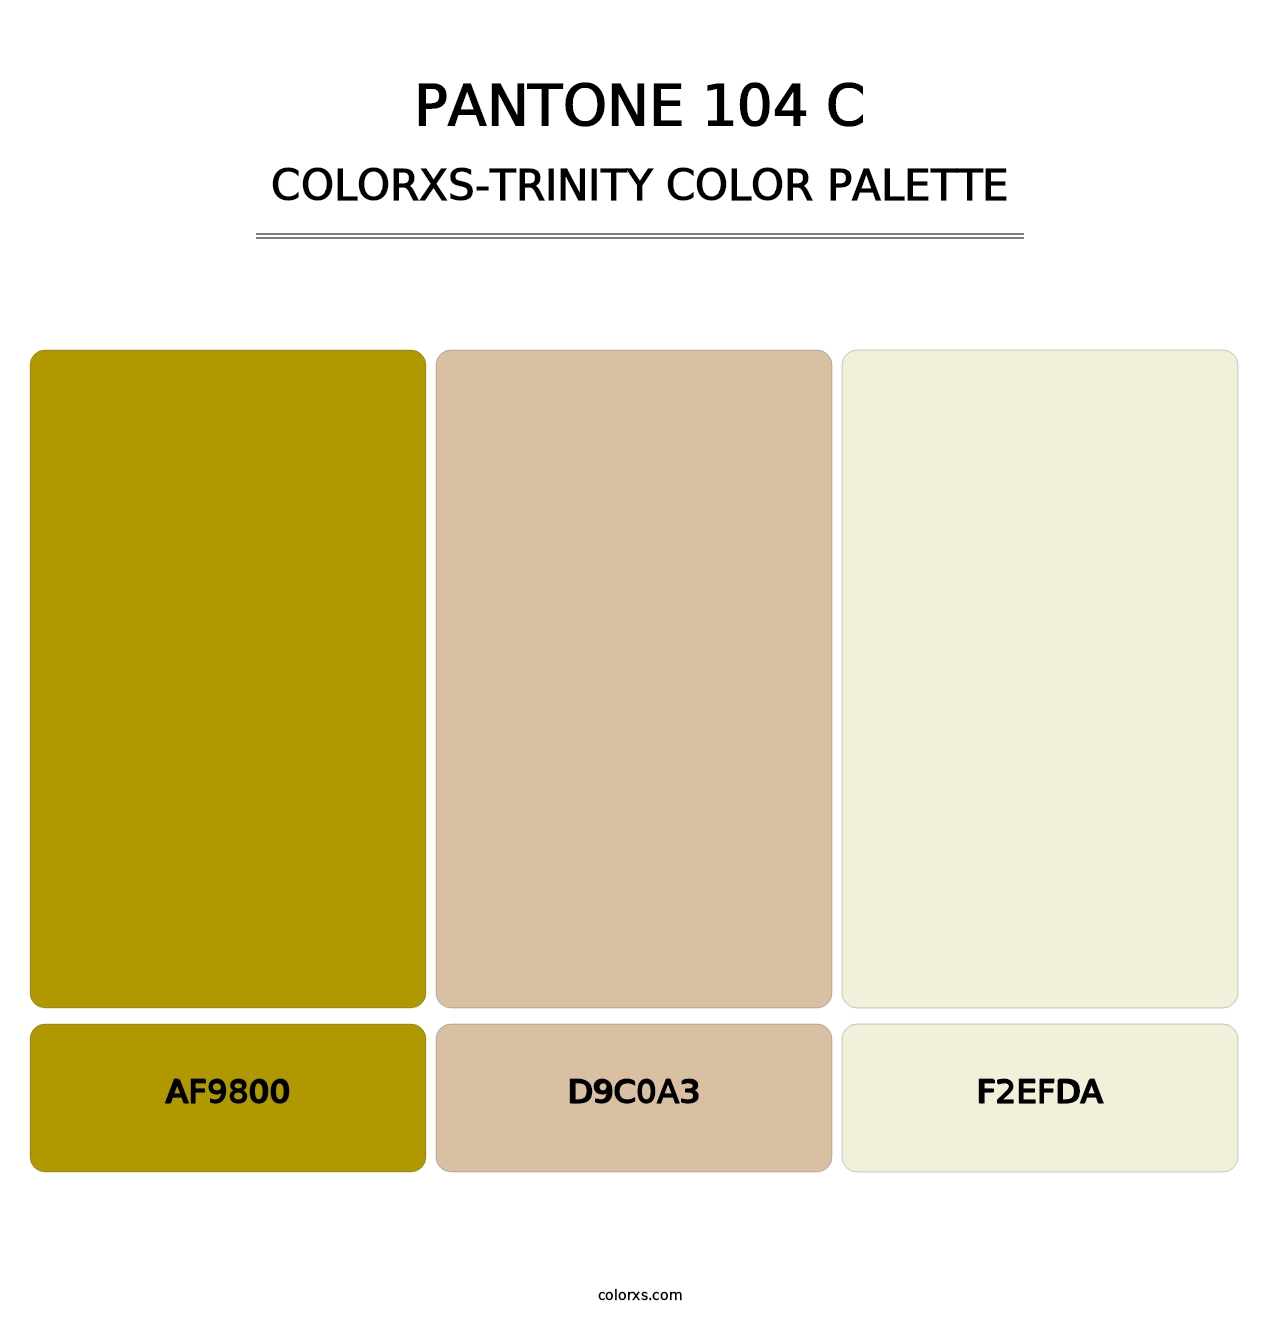 PANTONE 104 C - Colorxs Trinity Palette